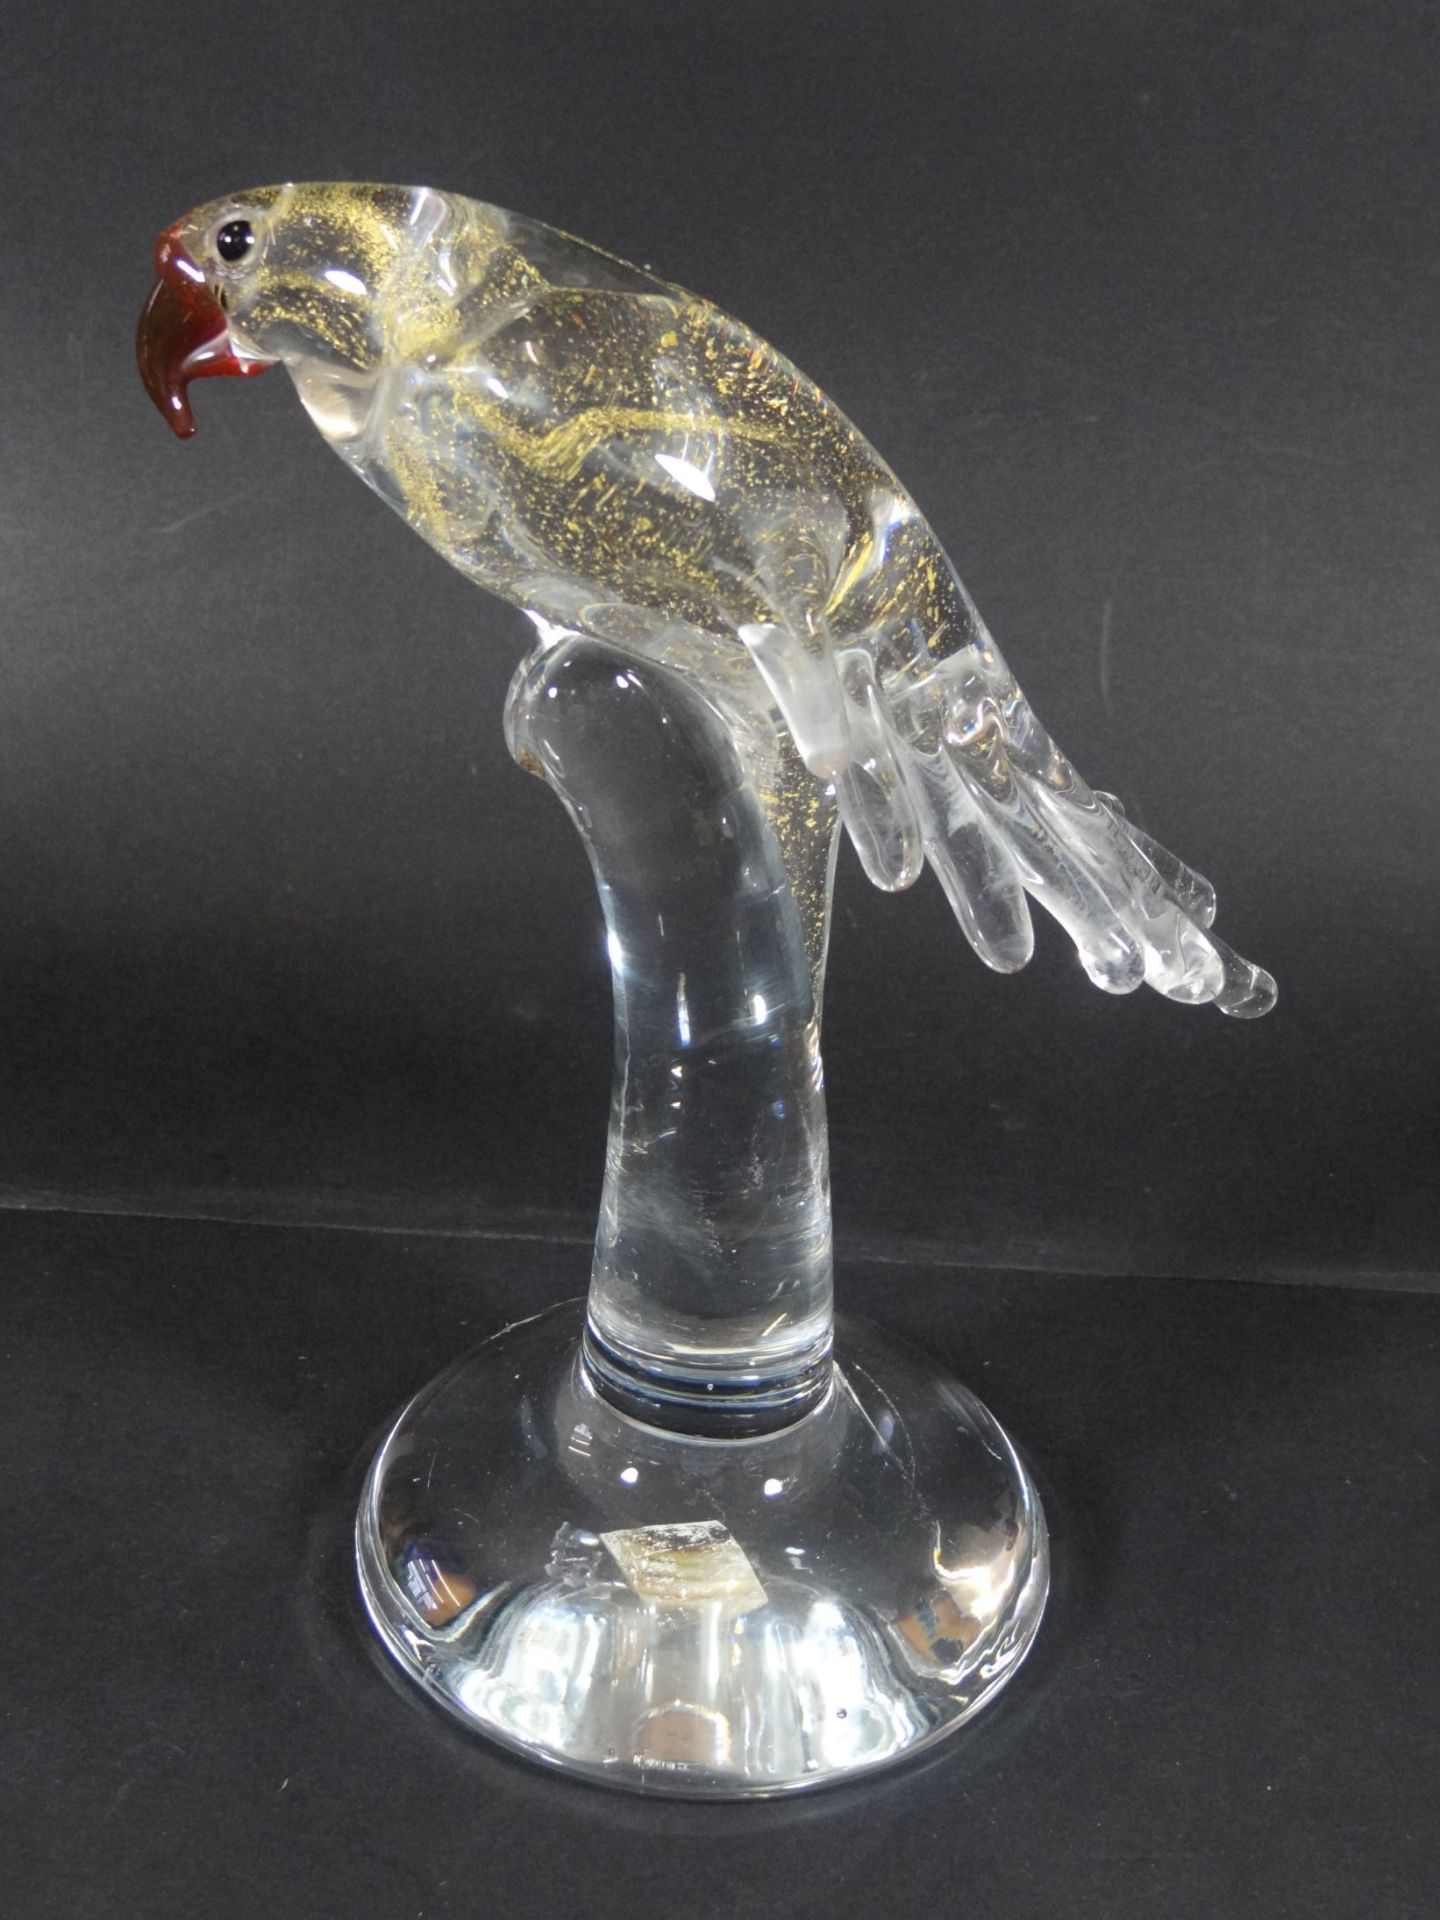 Papagei auf Stand, Czech repuplic handmade, H-19 cm - Image 2 of 5